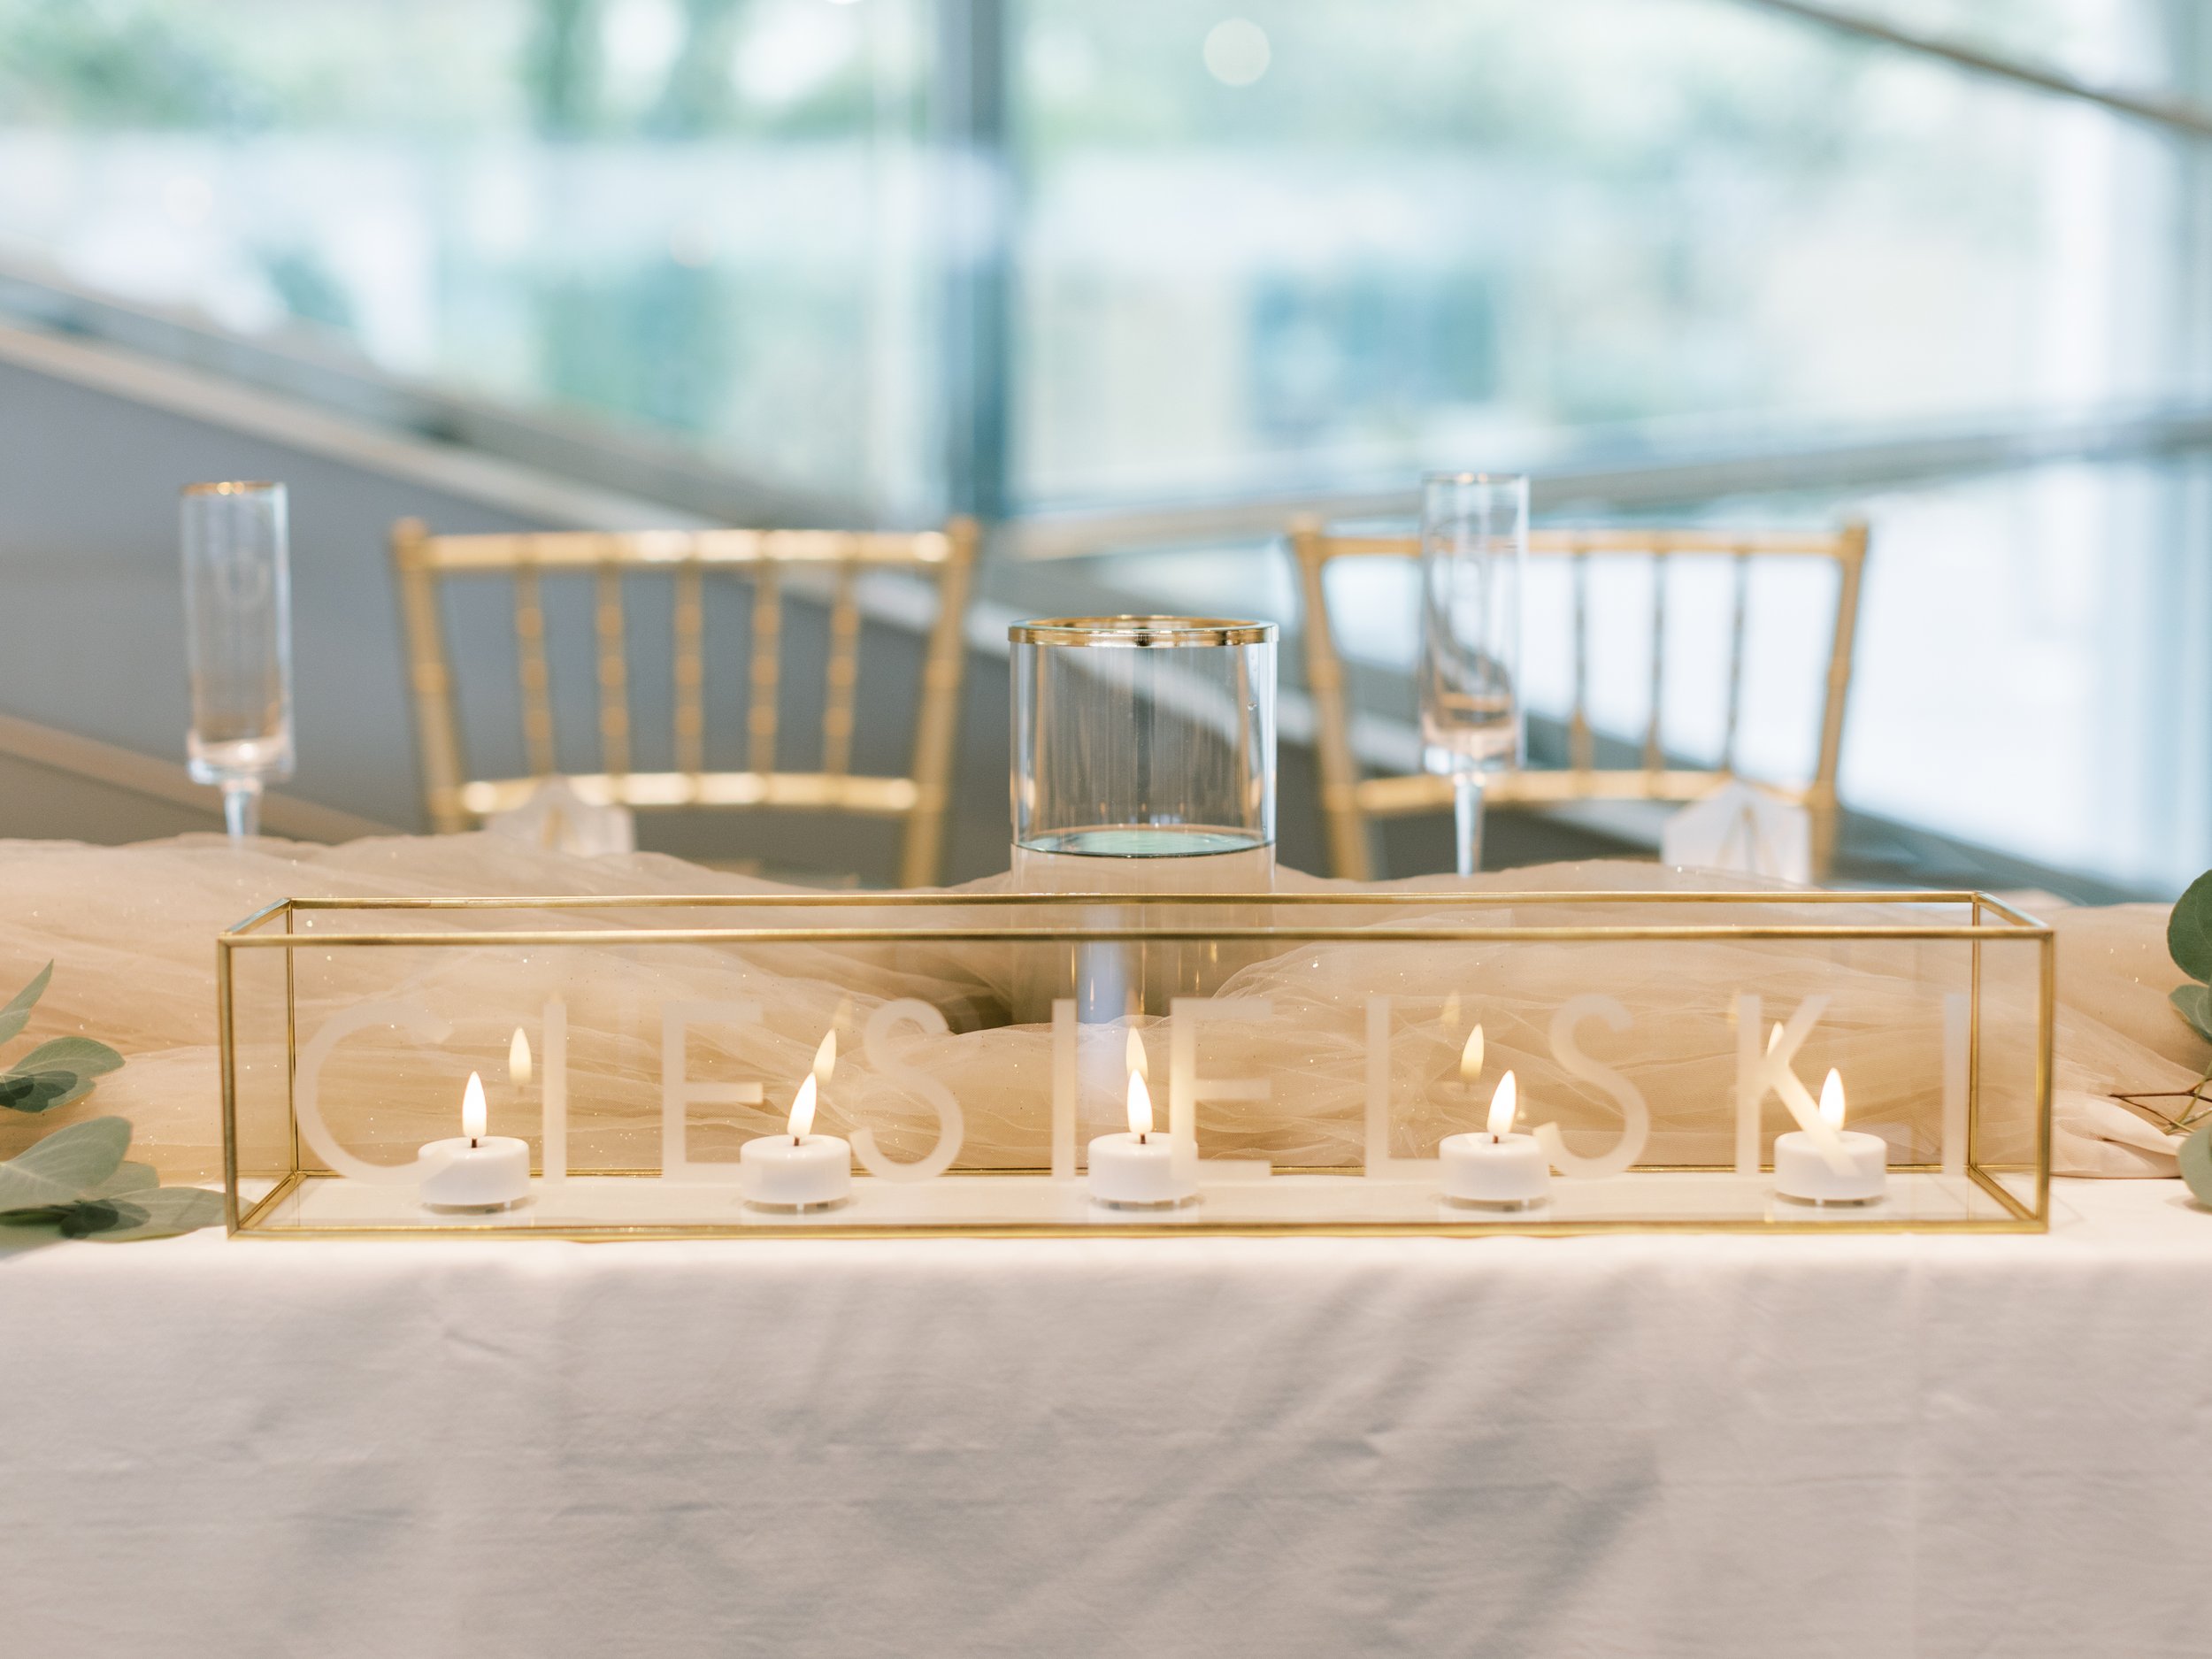 Ciesielski+Wedding+Reception+Details-41.jpg